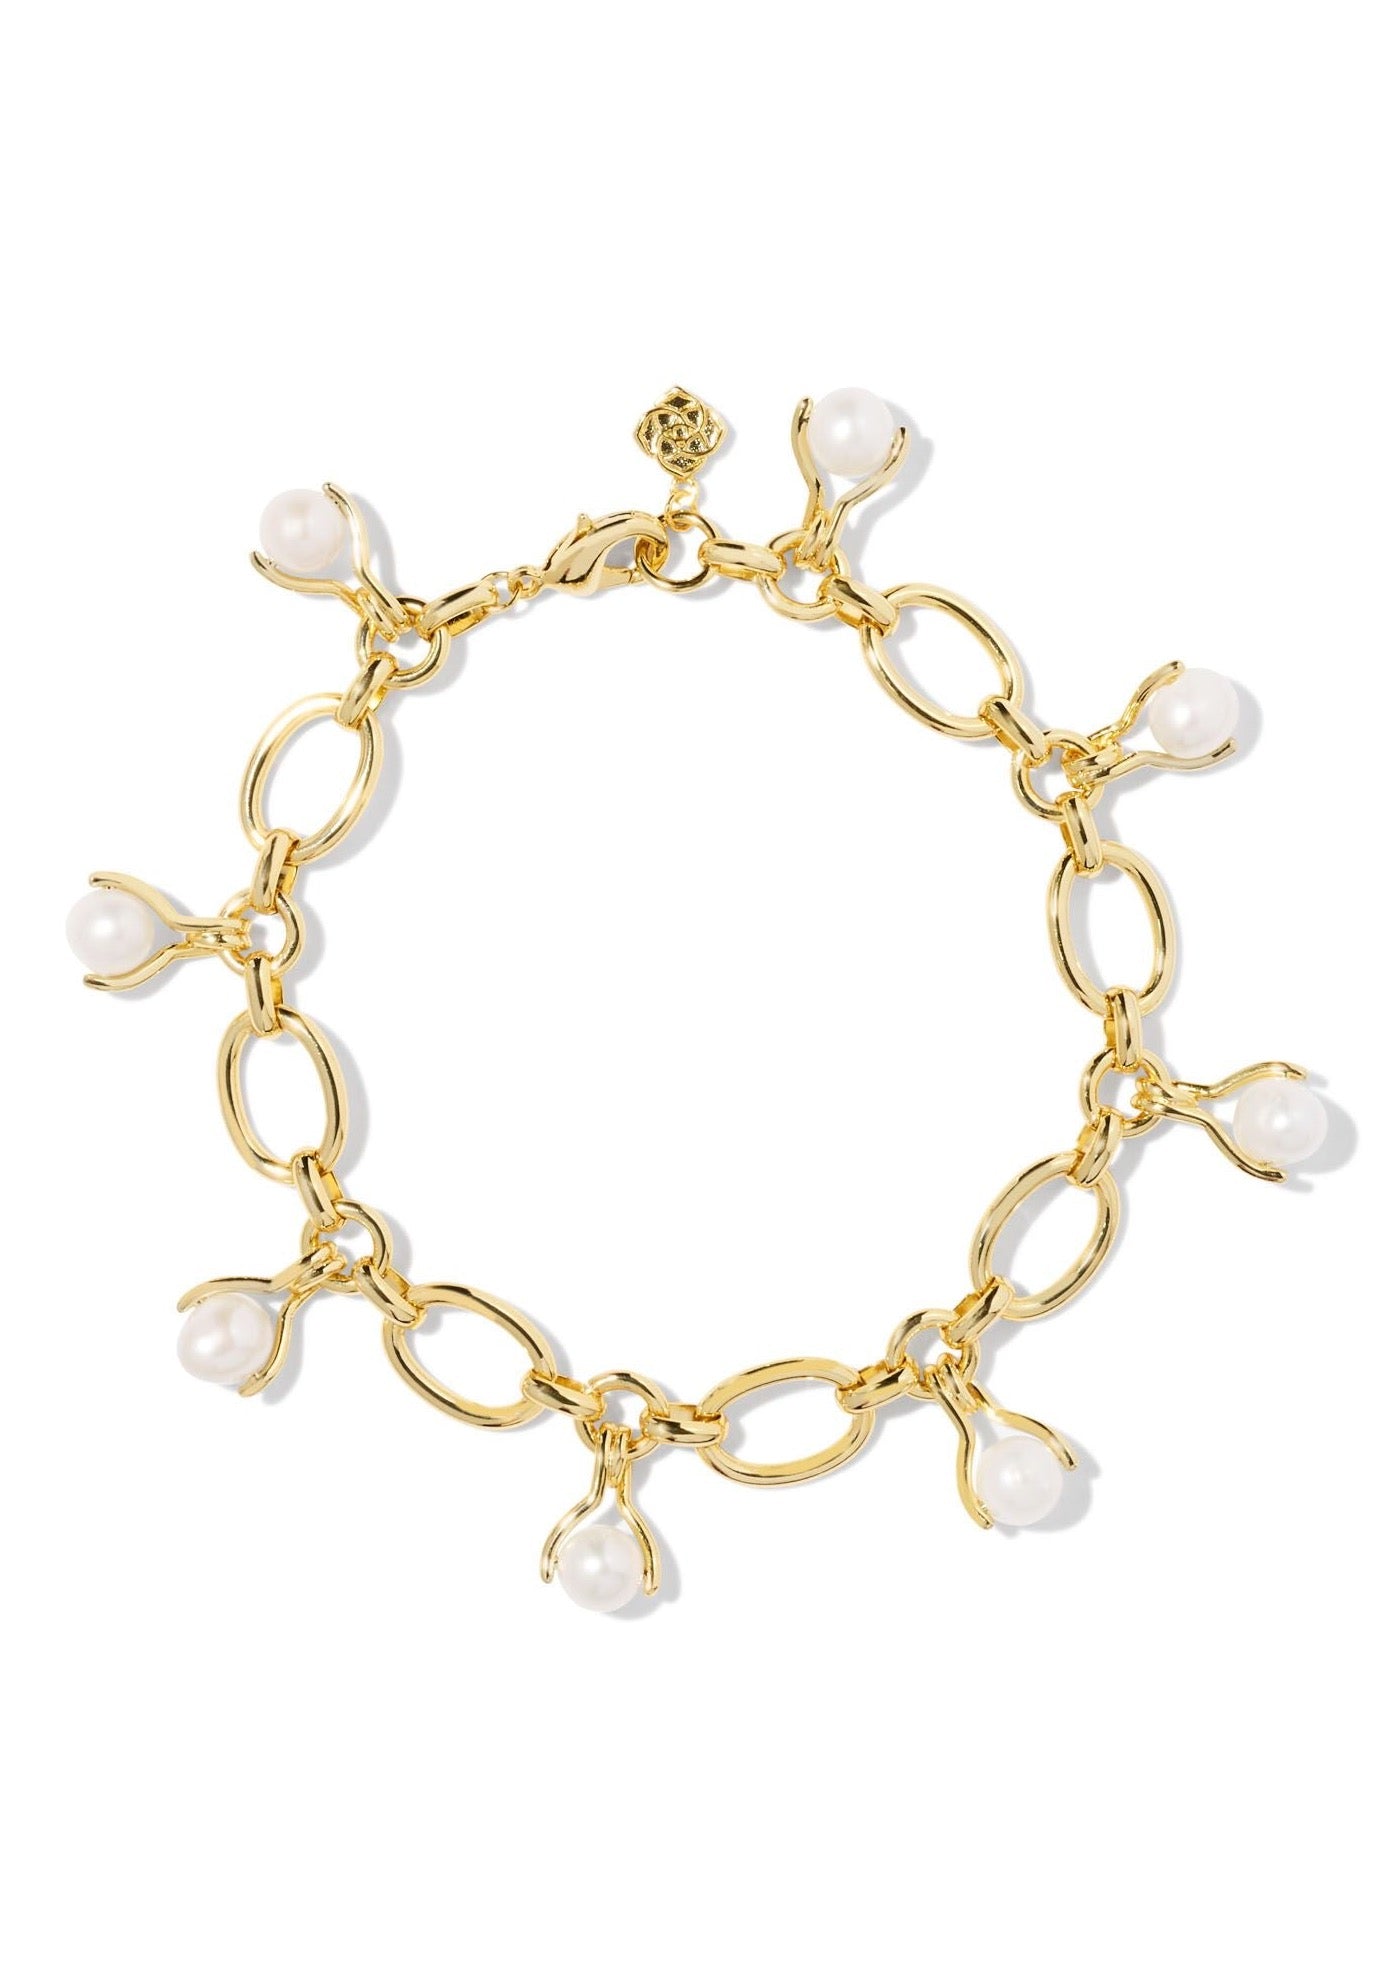 Ashton Pearl Chain Bracelet - Gold/White Pearl